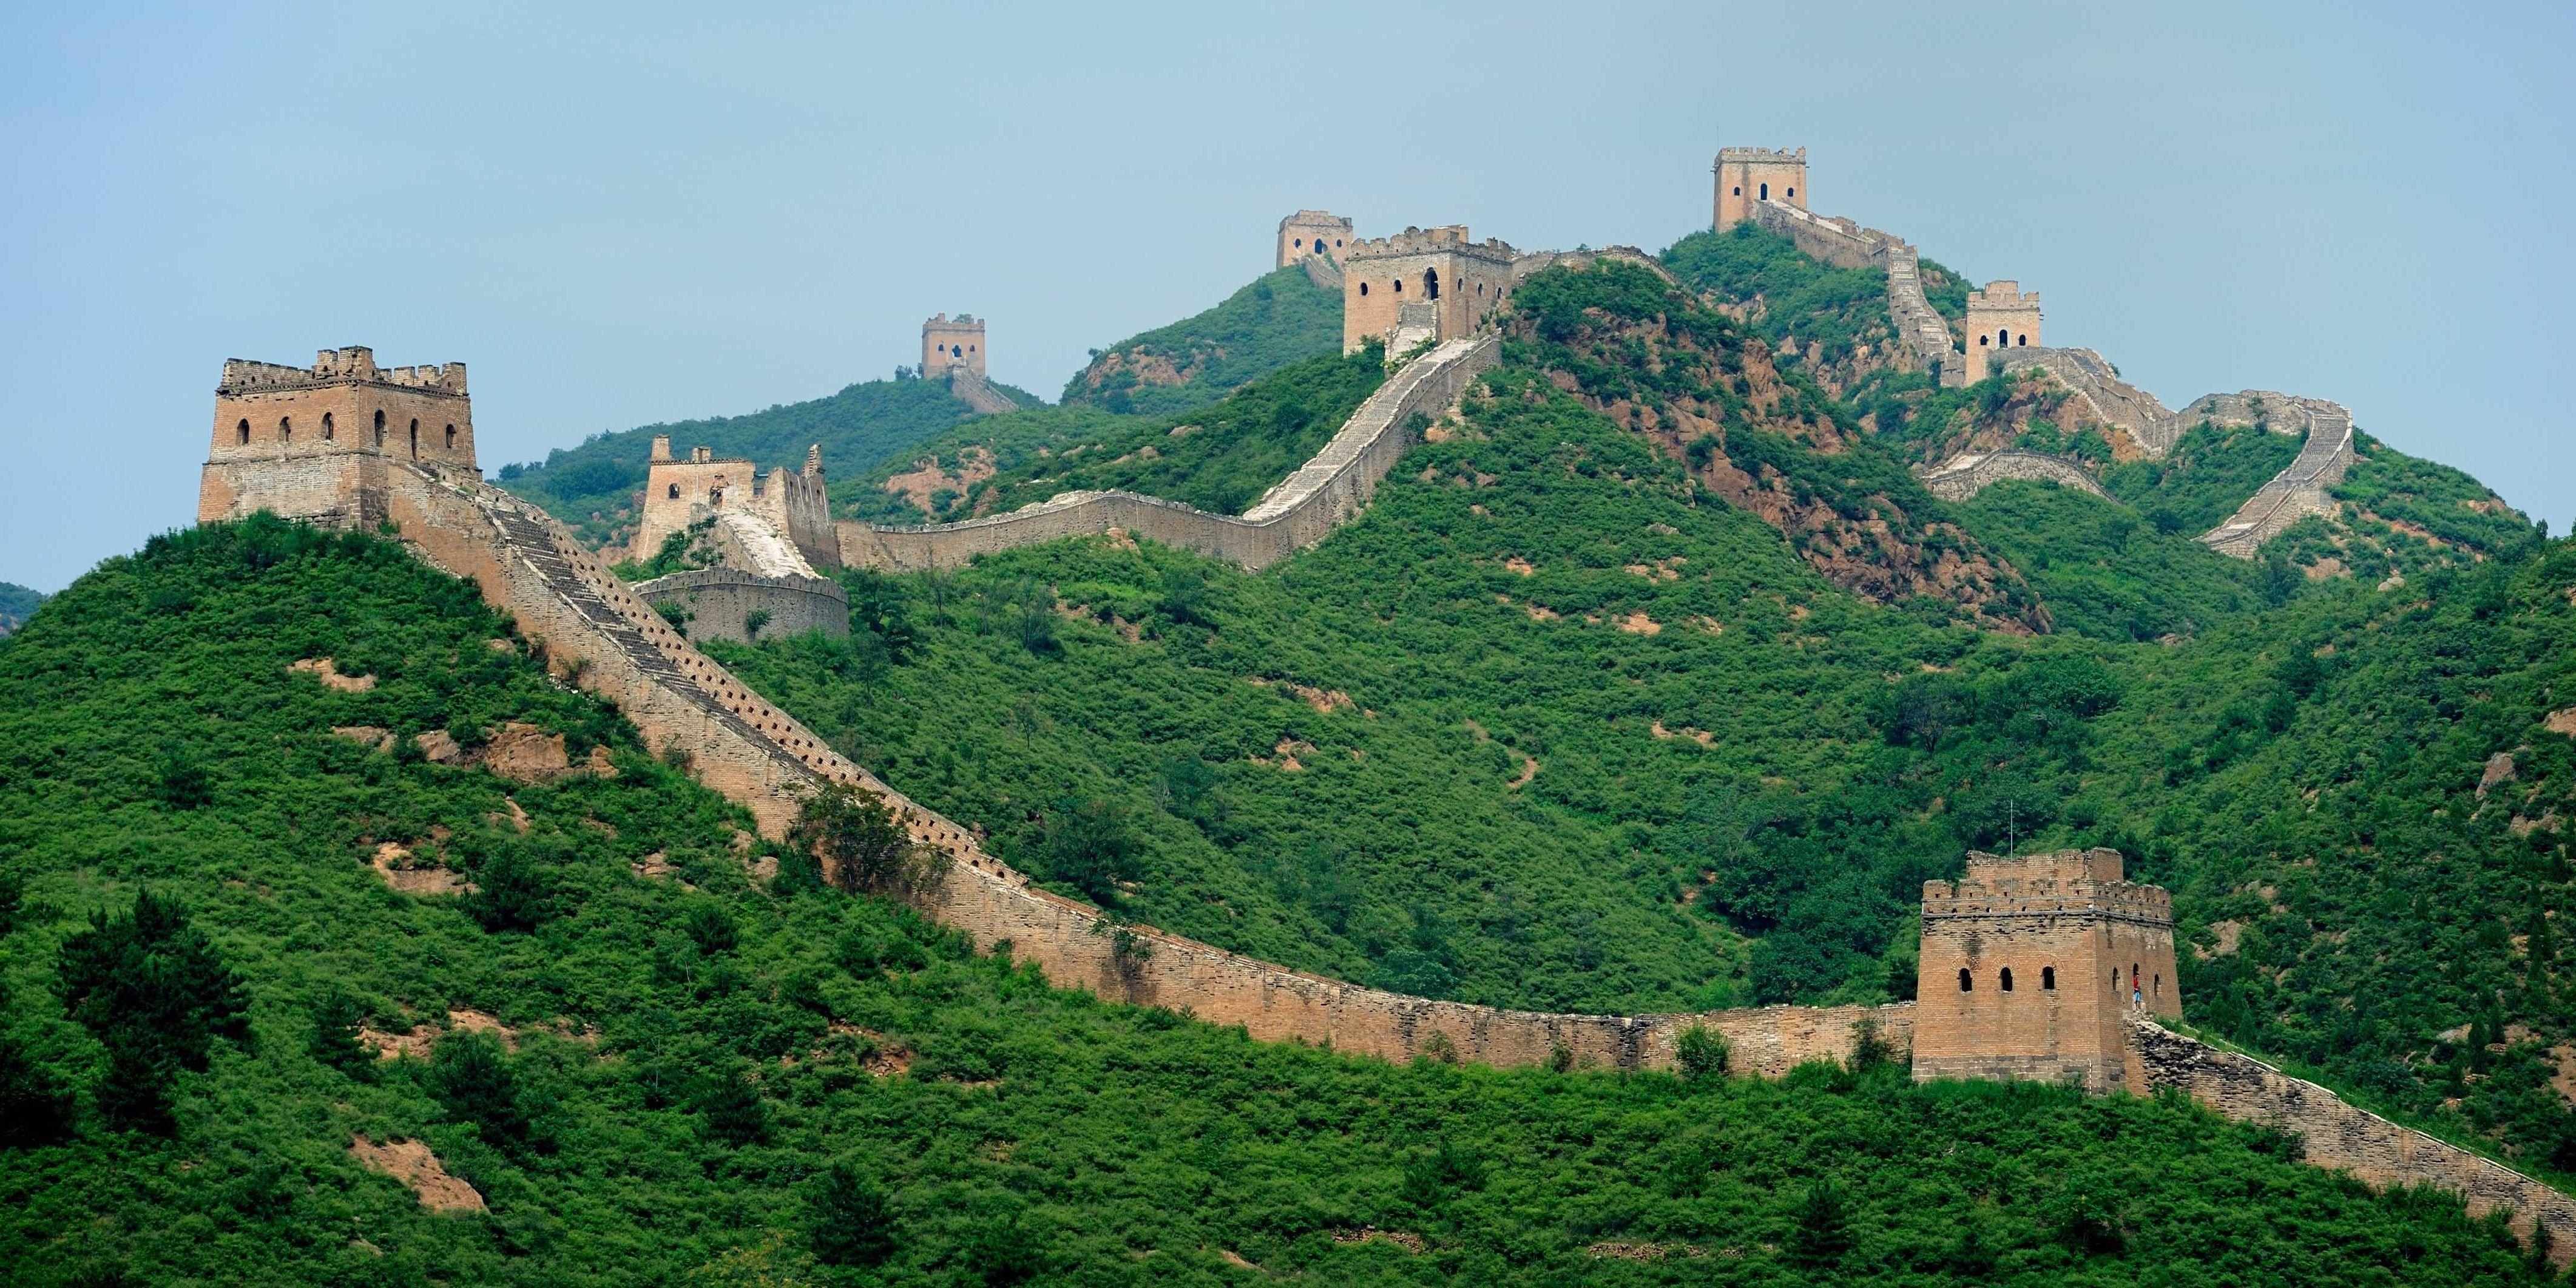 Great Wall of China Wallpapers - Top Free Great Wall of China